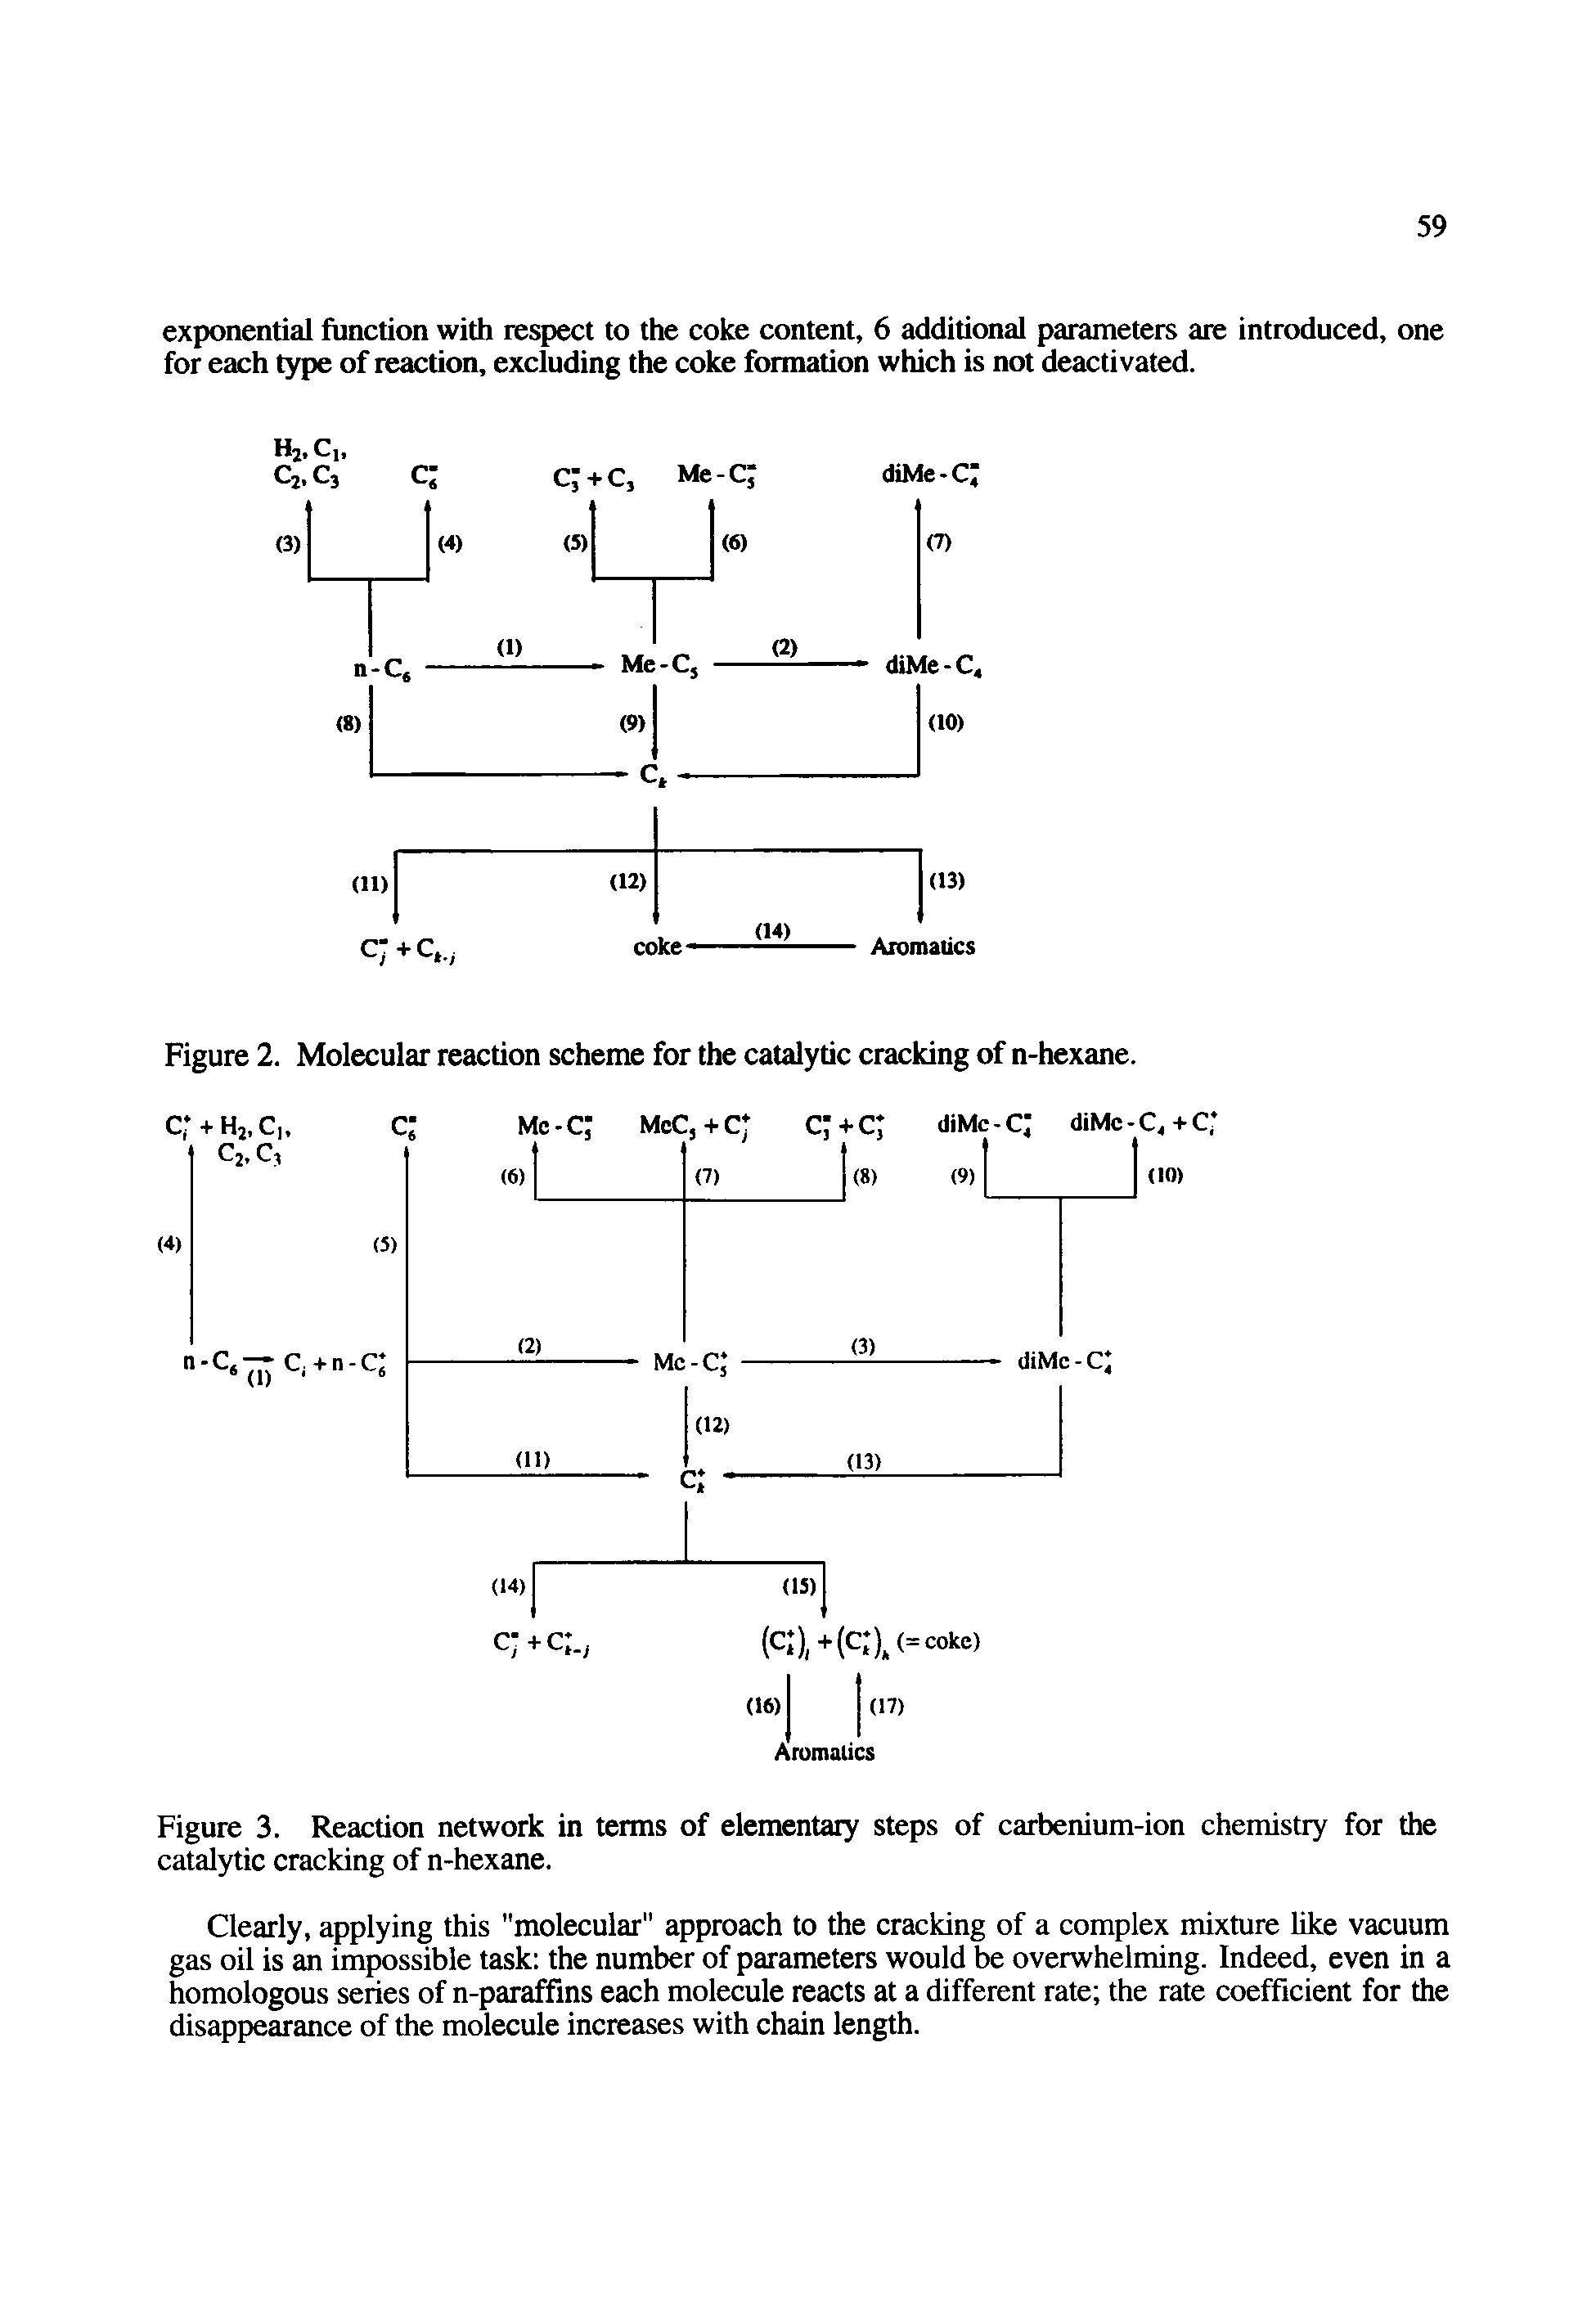 Figure 2. Molecular reaction scheme for the catalytic cracking of n-hexane.